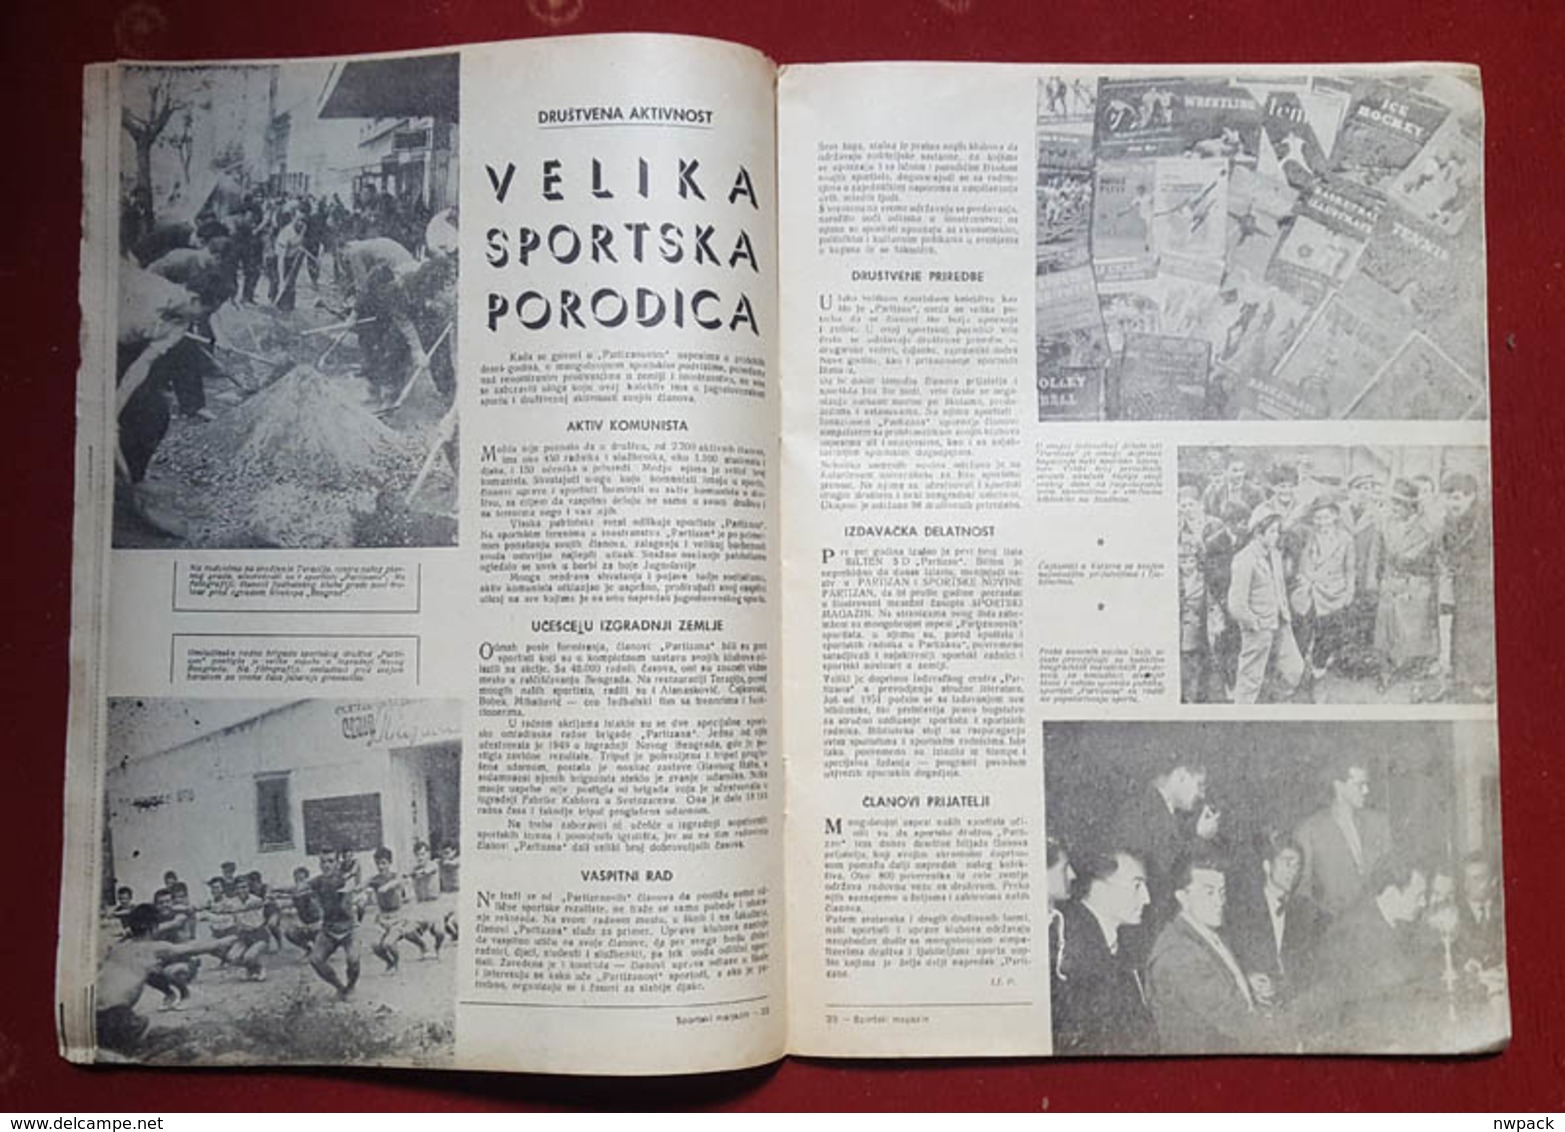 Football / Soocer ex Yugoslavia "SPORTSKI MAGAZIN" No.10 / 1955.  anniversary SD PARTIZAN, Belgrade 1945-1955.